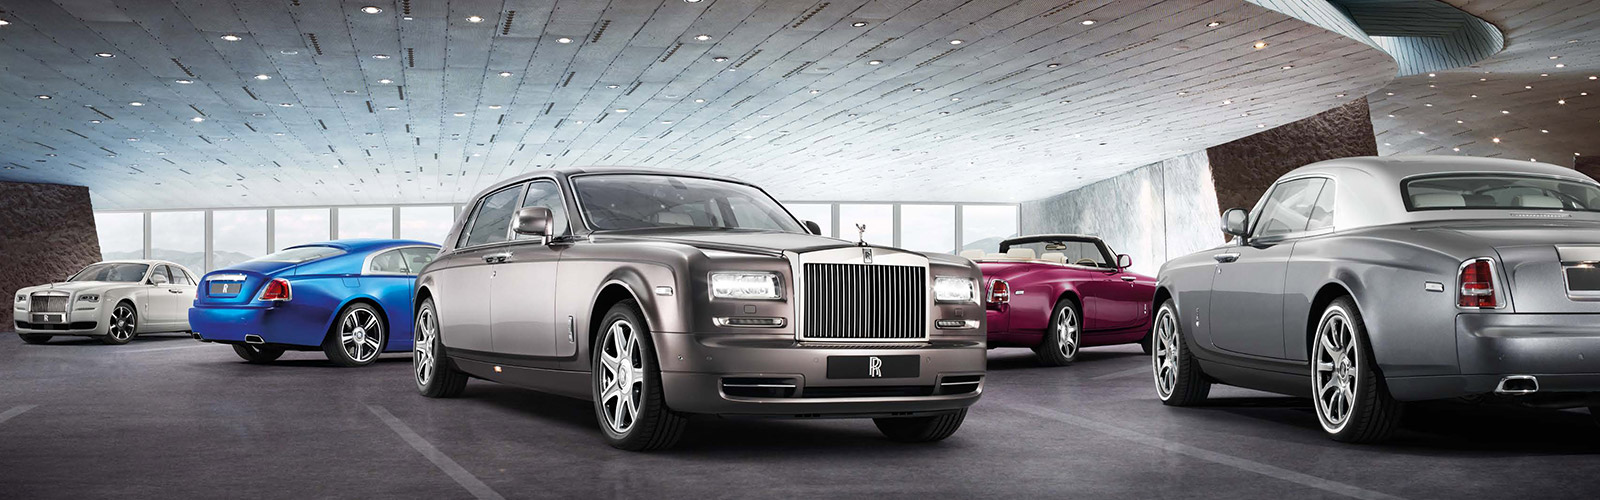 Rolls-Royce_Banner1